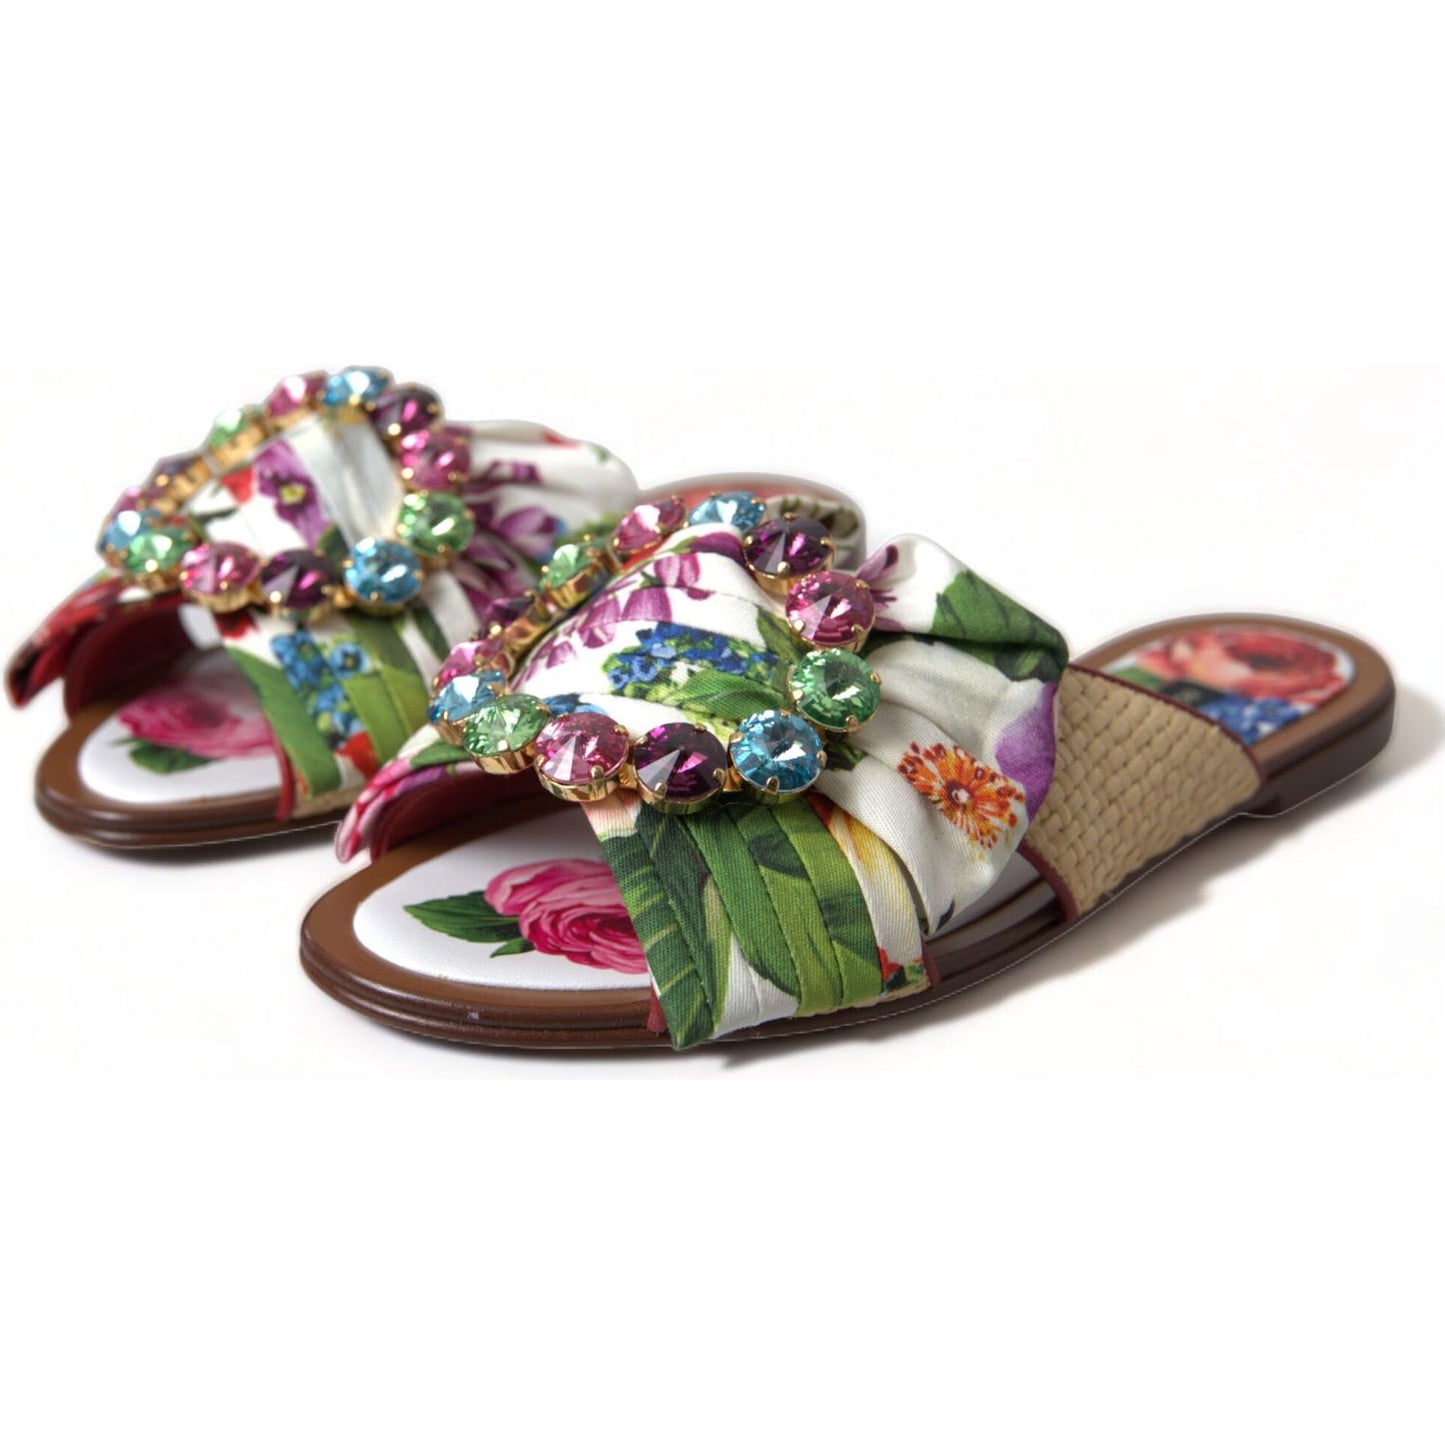 Dolce & Gabbana Exquisite Floral Print Flat Sandals multicolor-floral-flats-crystal-sandals-shoes